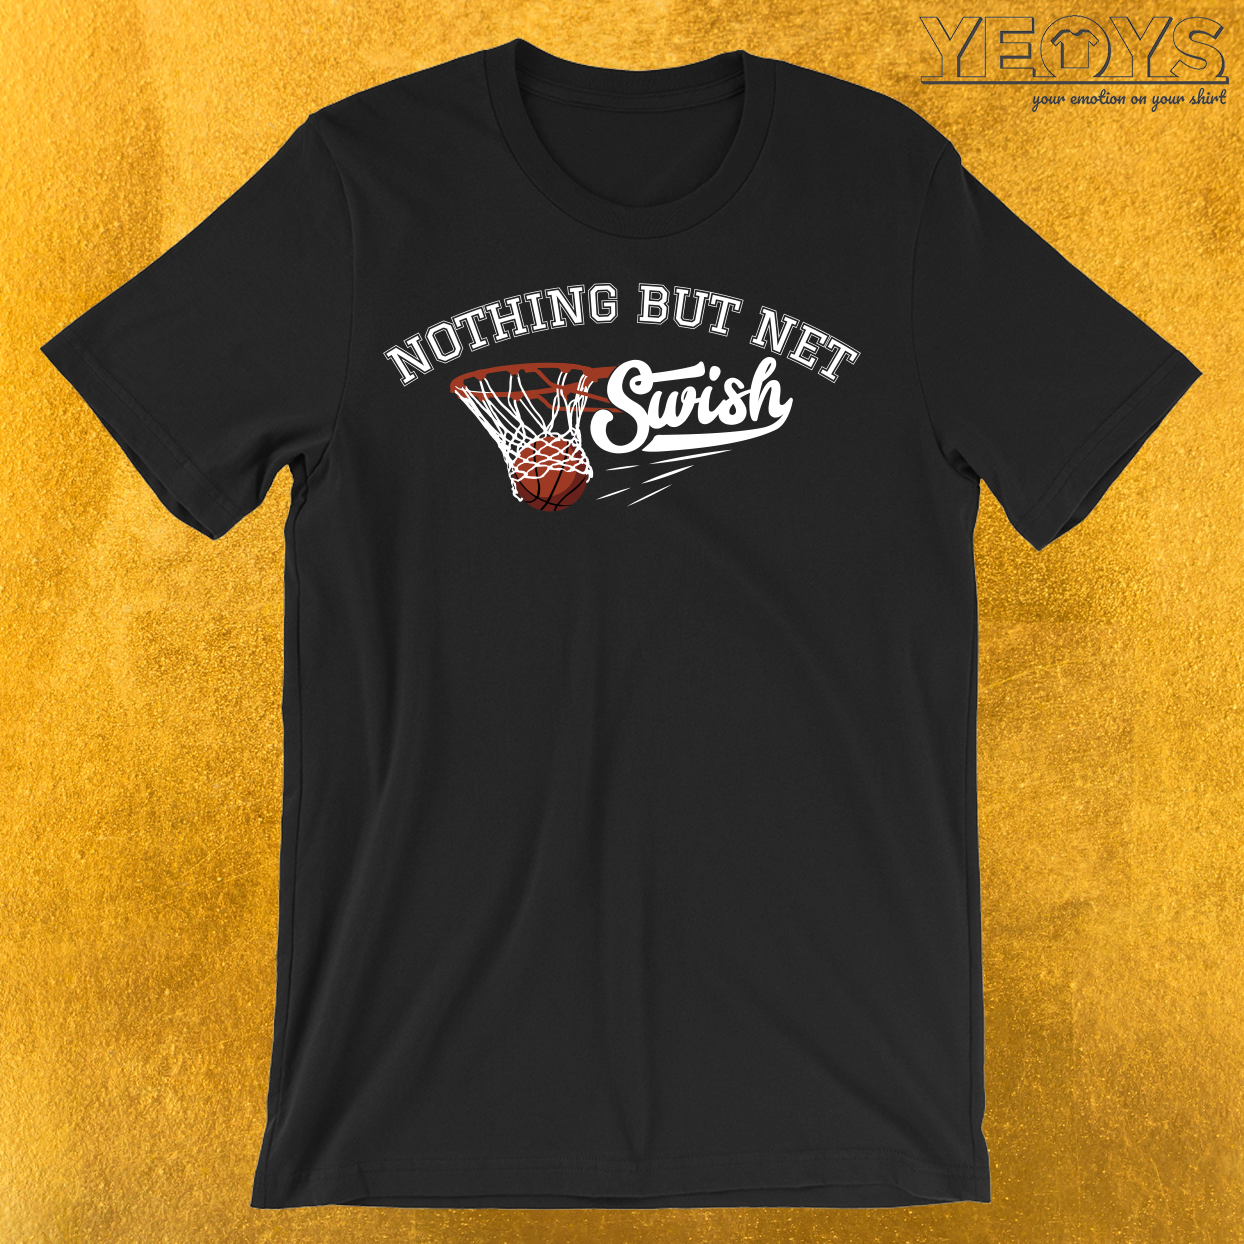 Nothing But Net T-Shirt